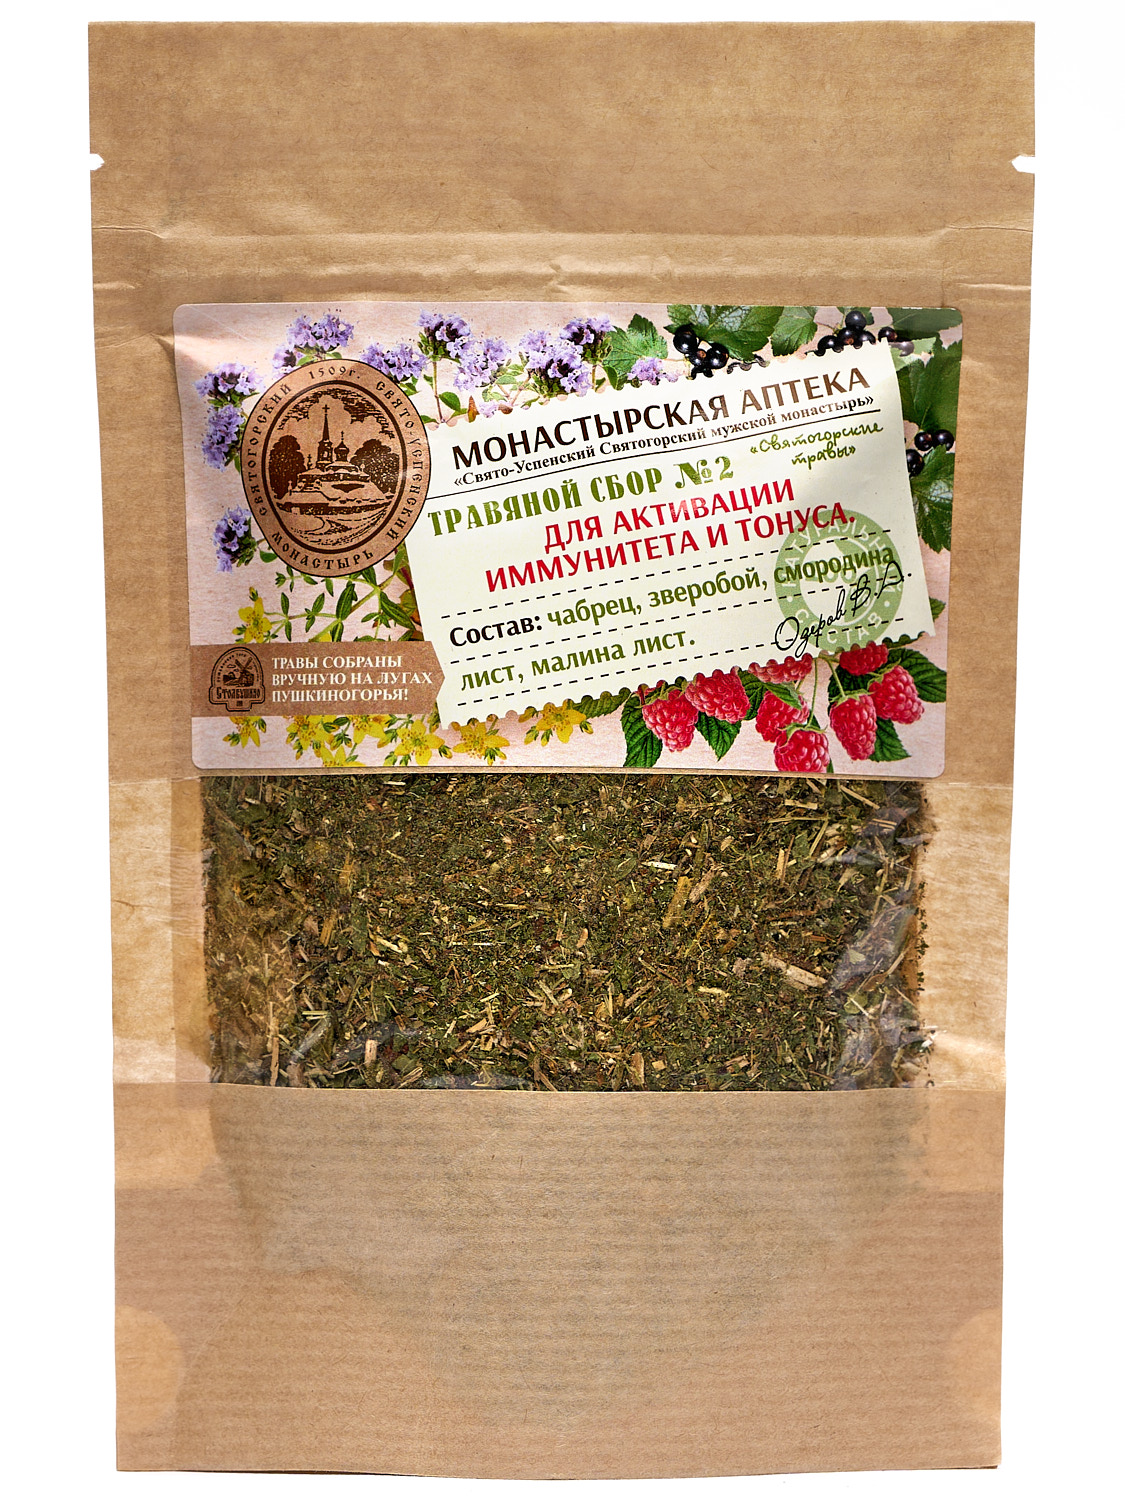 Herbal tea collection "Svyatogorsk herbs" (thyme, raspberry, currant, St. John's wort) No. 2.